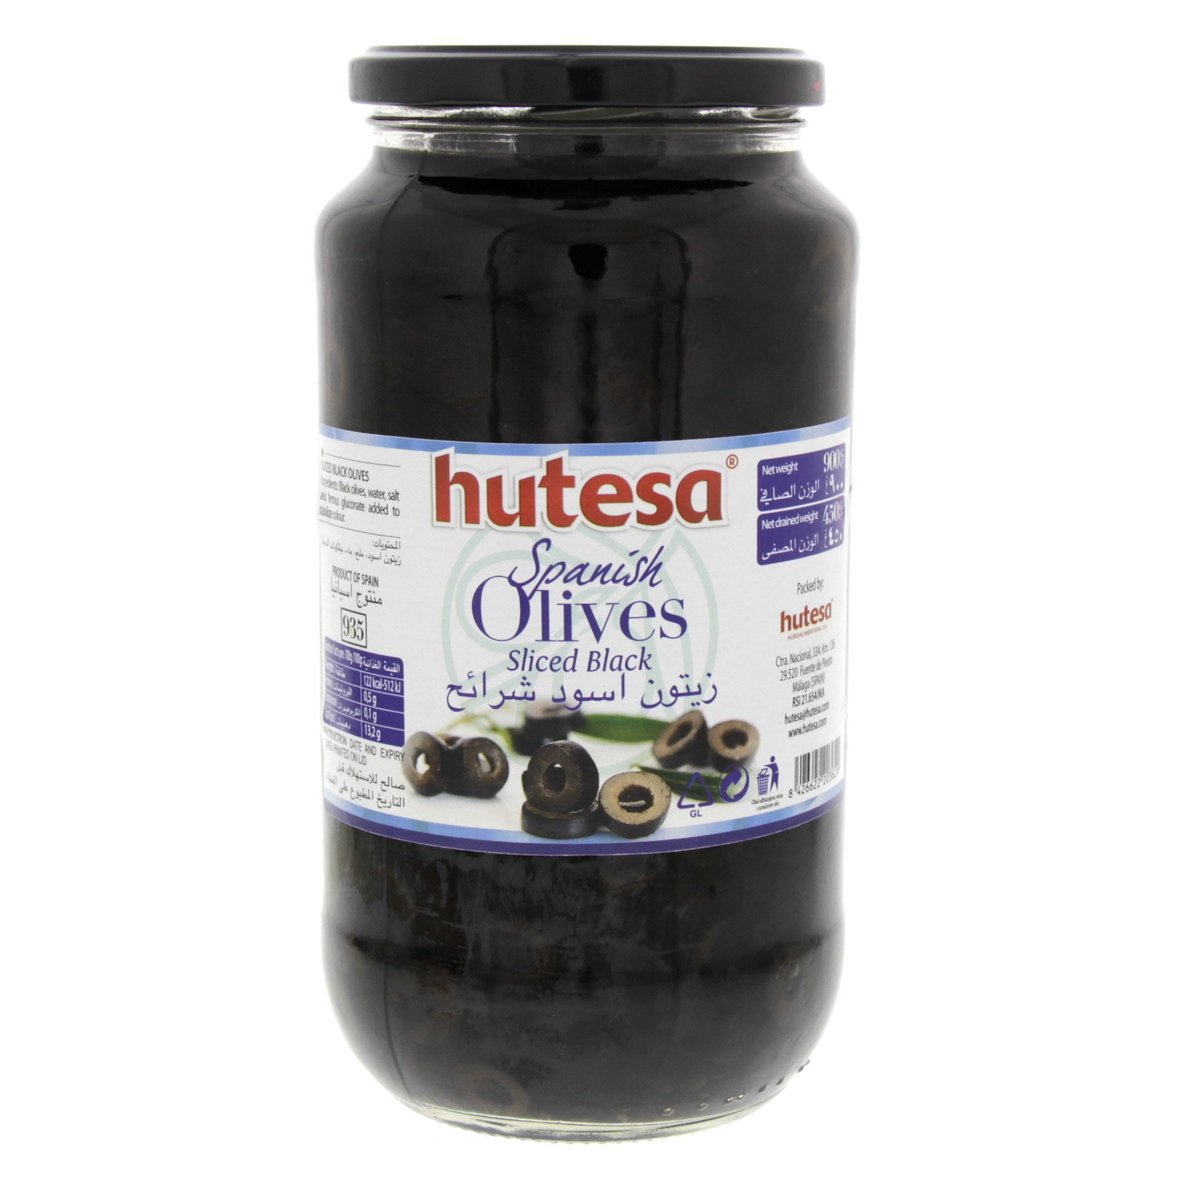 Hutesa Spanish Black Olives Sliced 450g